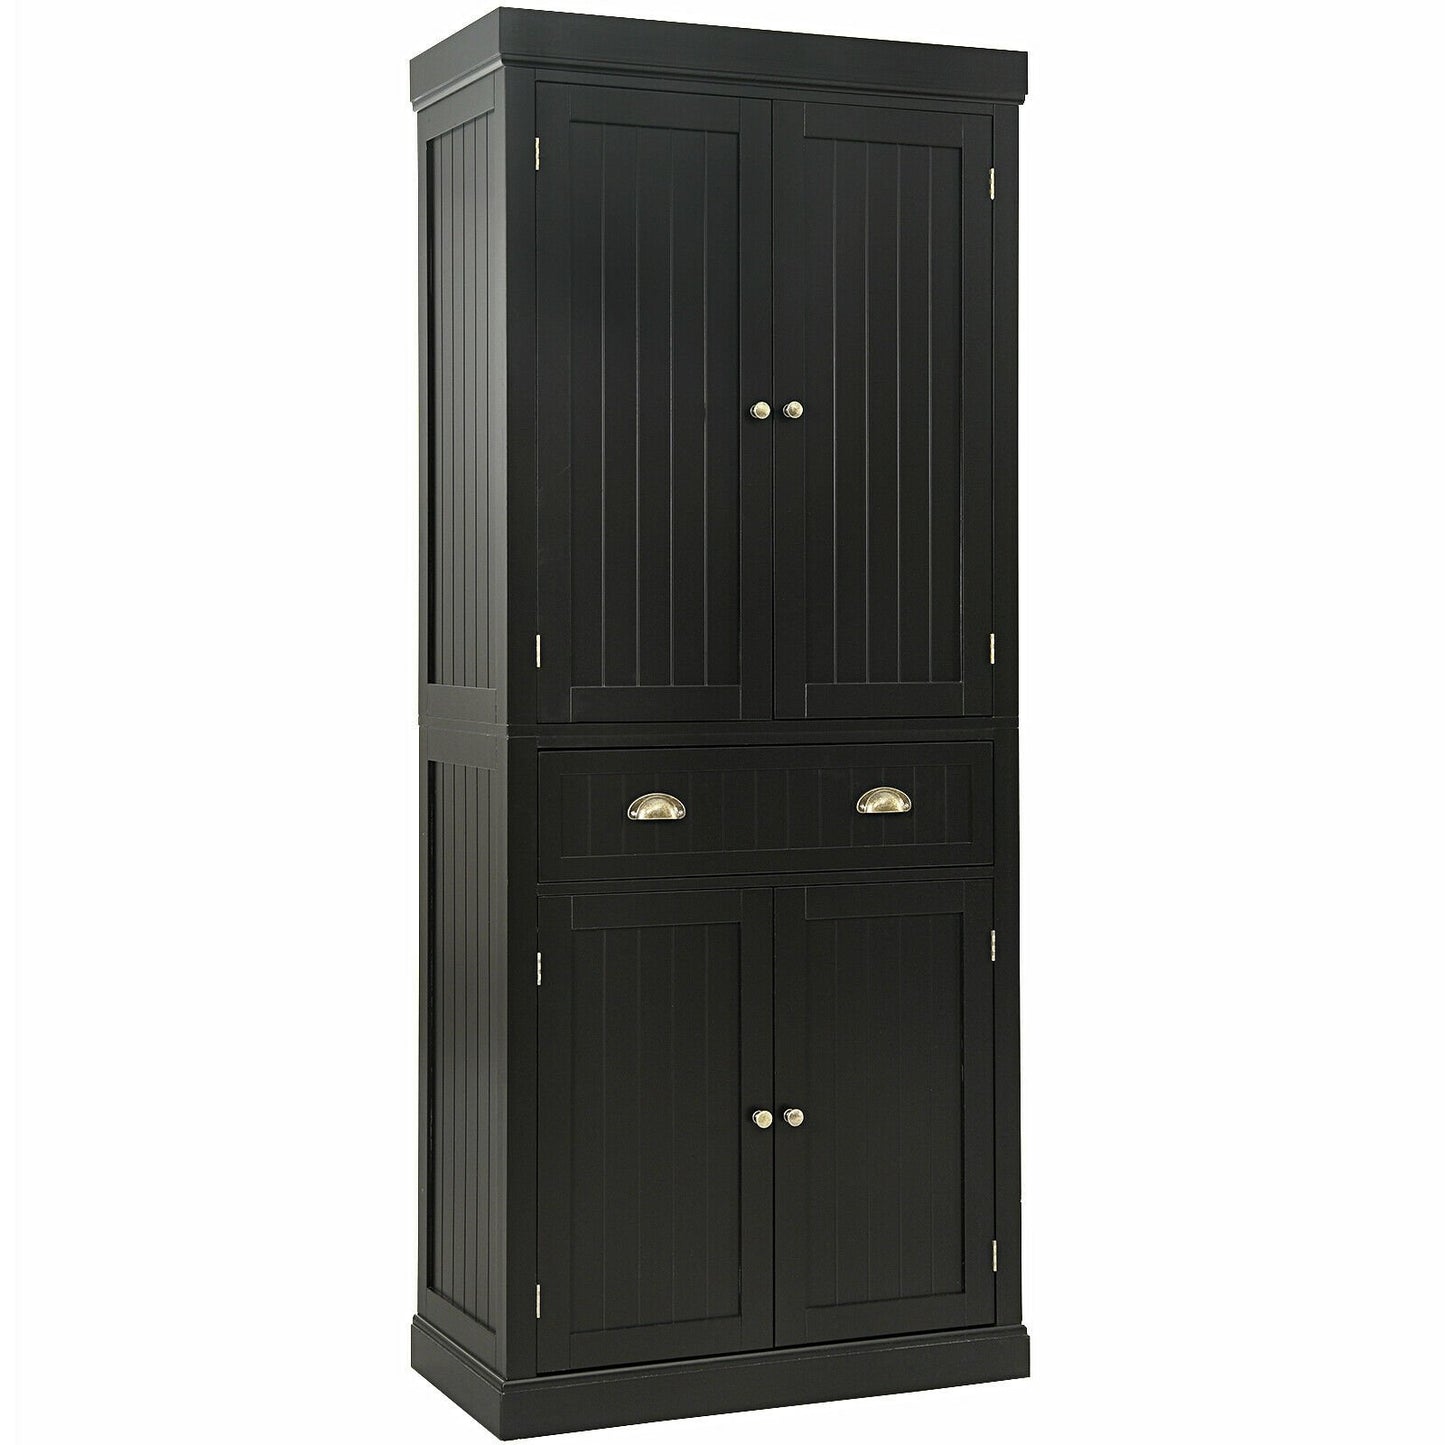 Cupboard Freestanding Kitchen Cabinet w/ Adjustable Shelves, Dark Brown - Gallery Canada